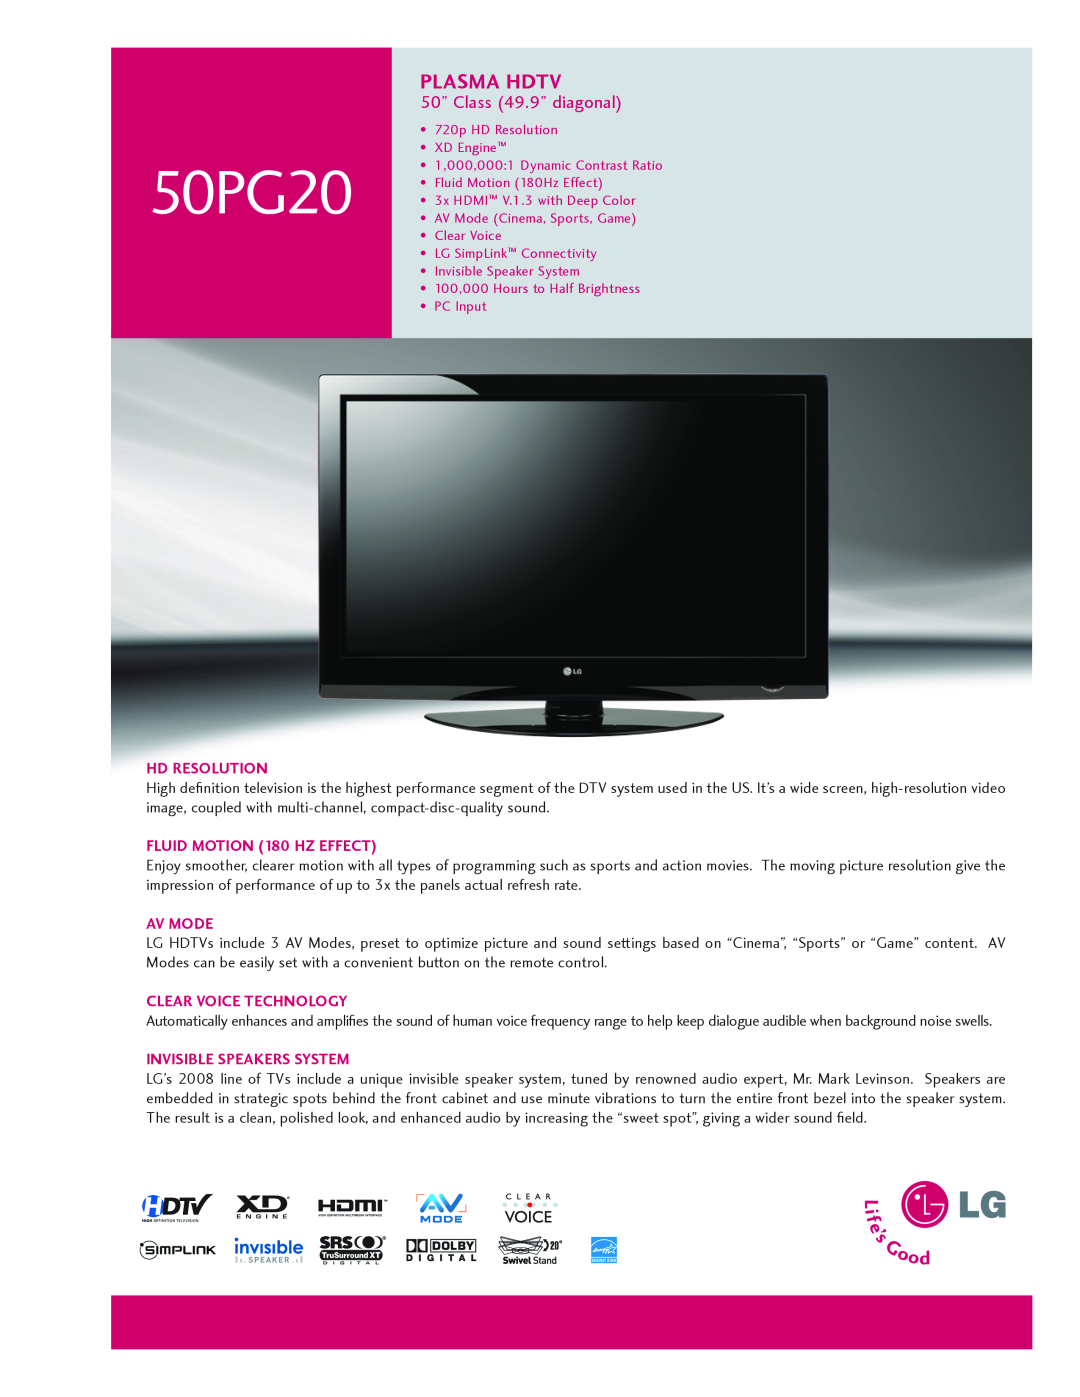 LG Electronics 50PG20 manual Plasma Hdtv, 50” Class 49.9” diagonal, HD Resolution, Fluid Motion 180 Hz Effect, Av Mode 